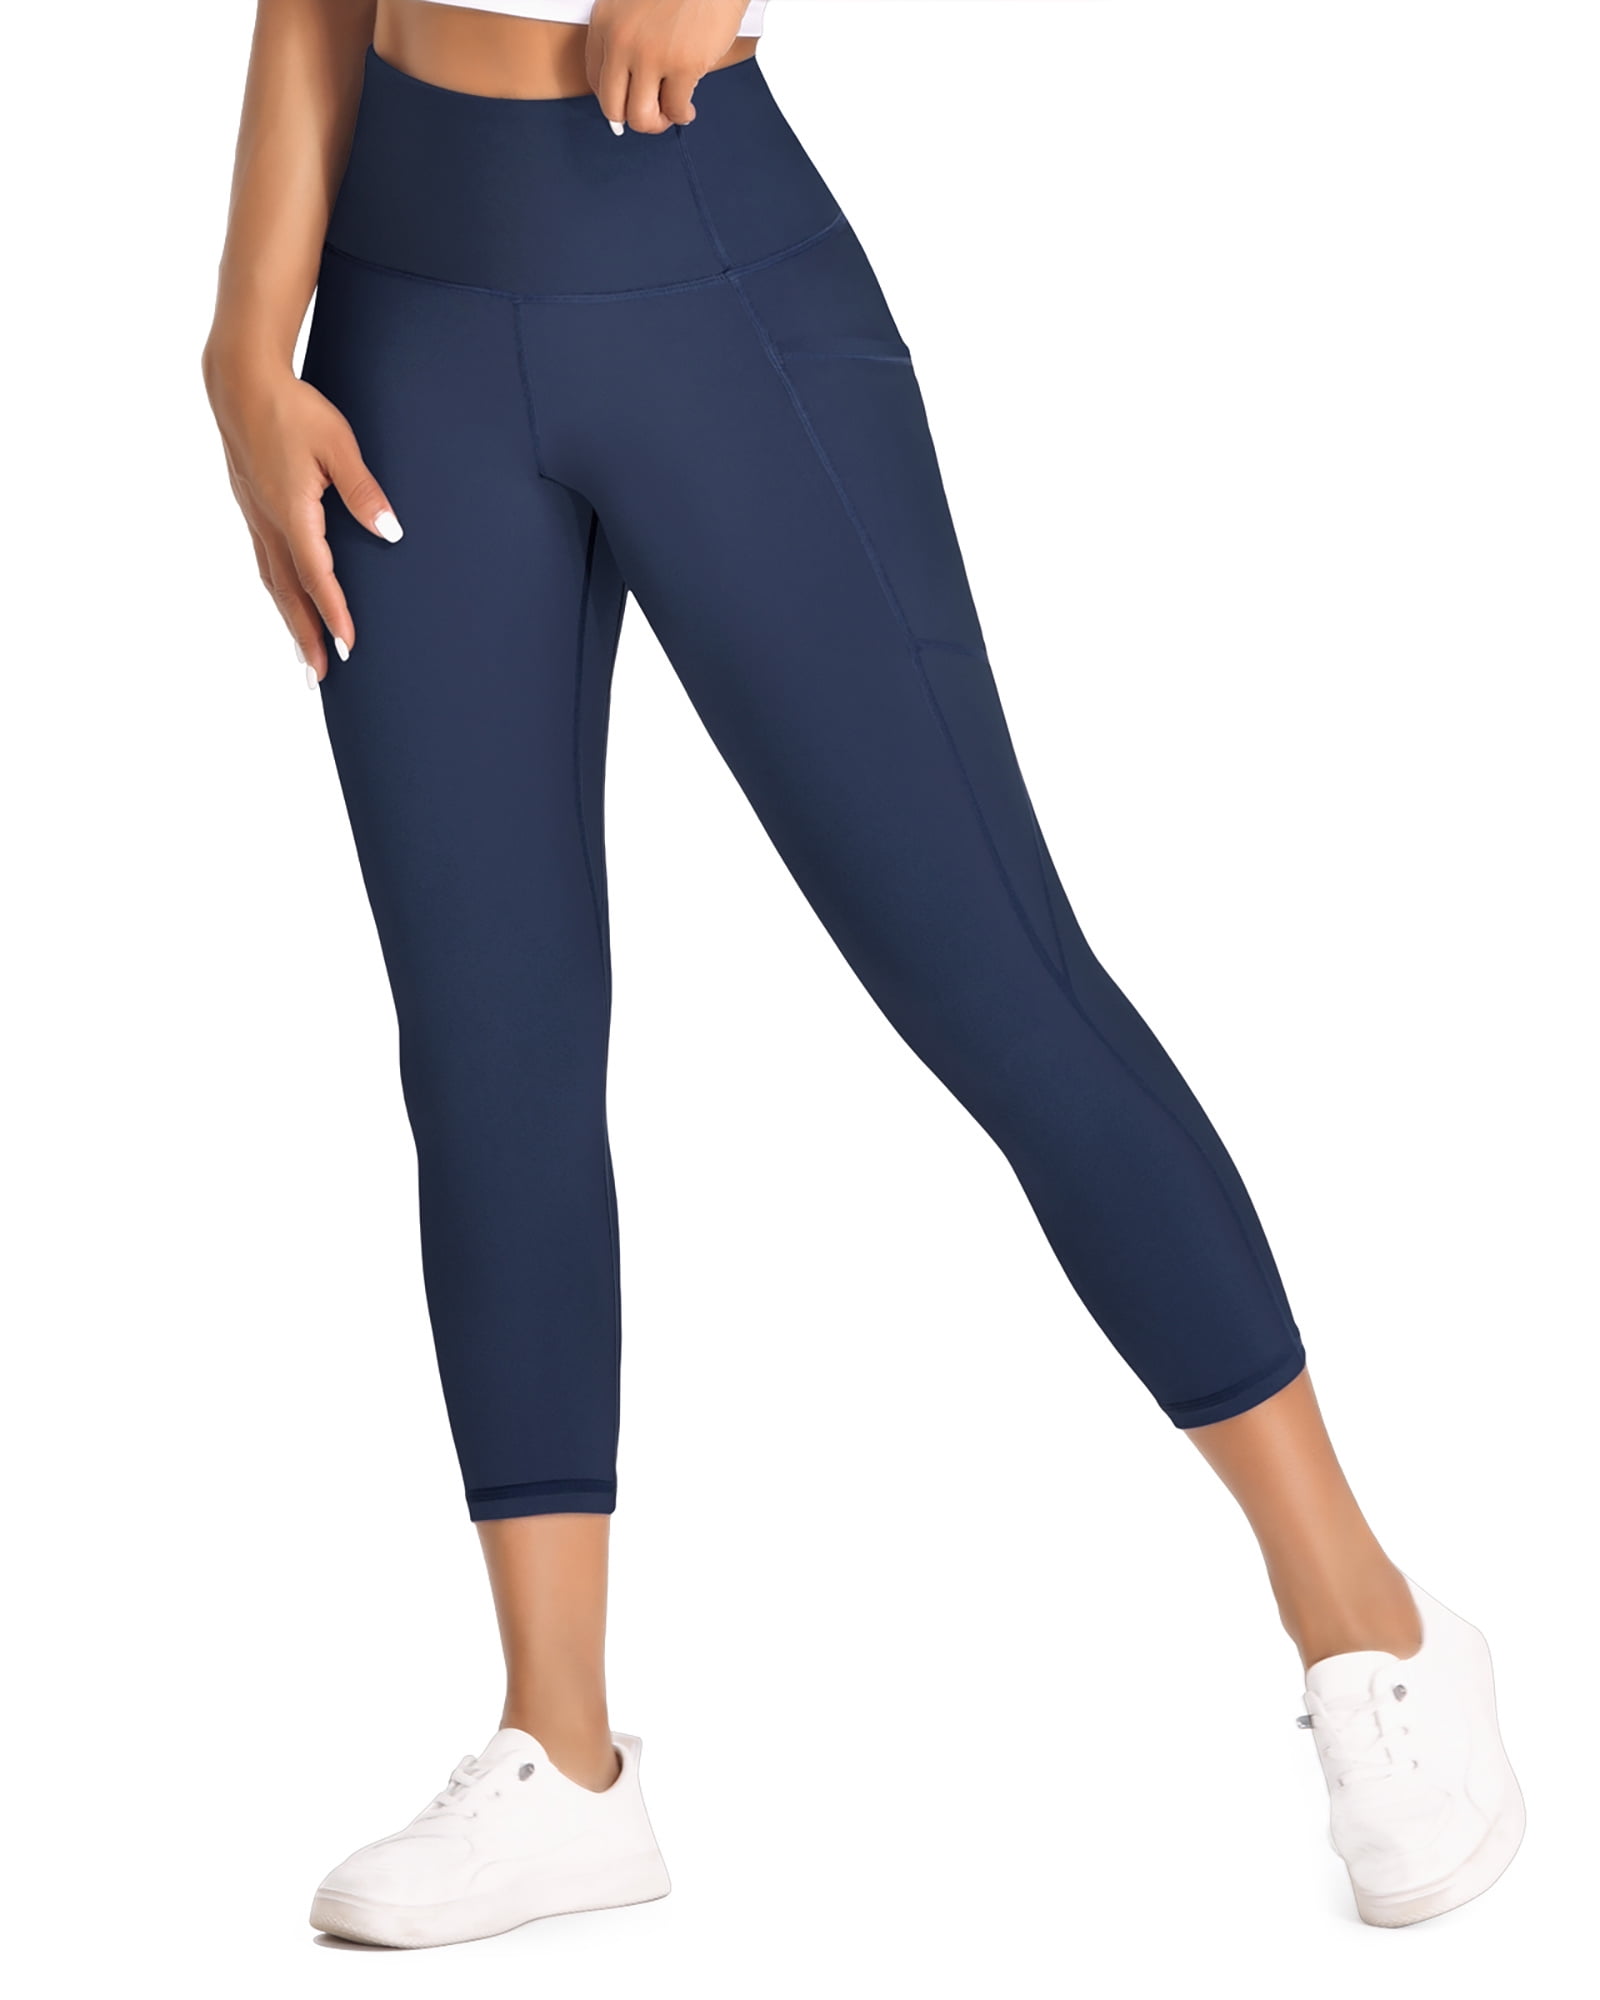 Women's Navy Blue Yoga Capris Legging - Quality Sportswear — Rarp-ID Fitness